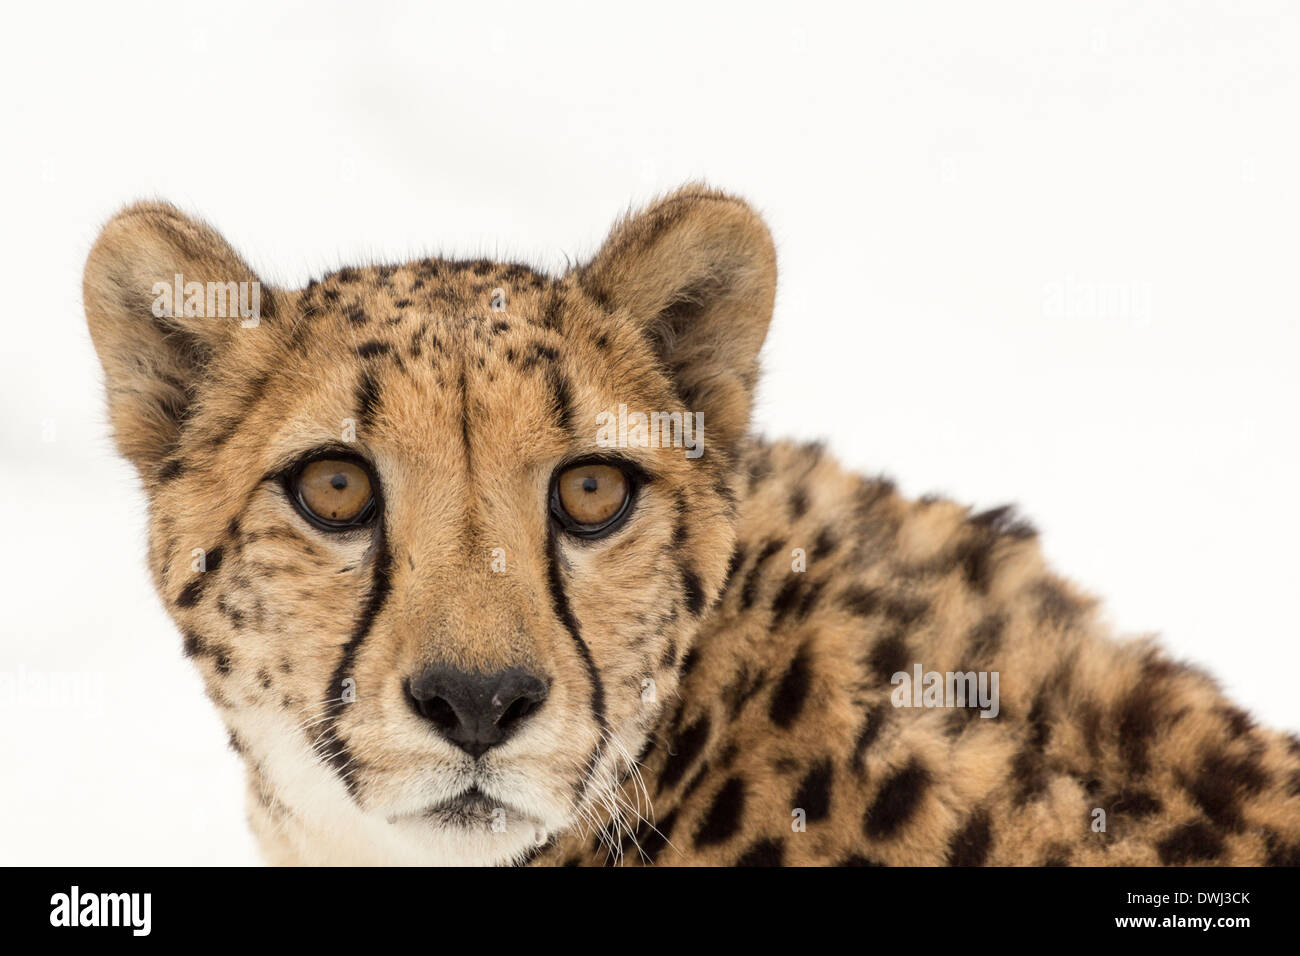 Cheetah face staring right into camera Stock Photo